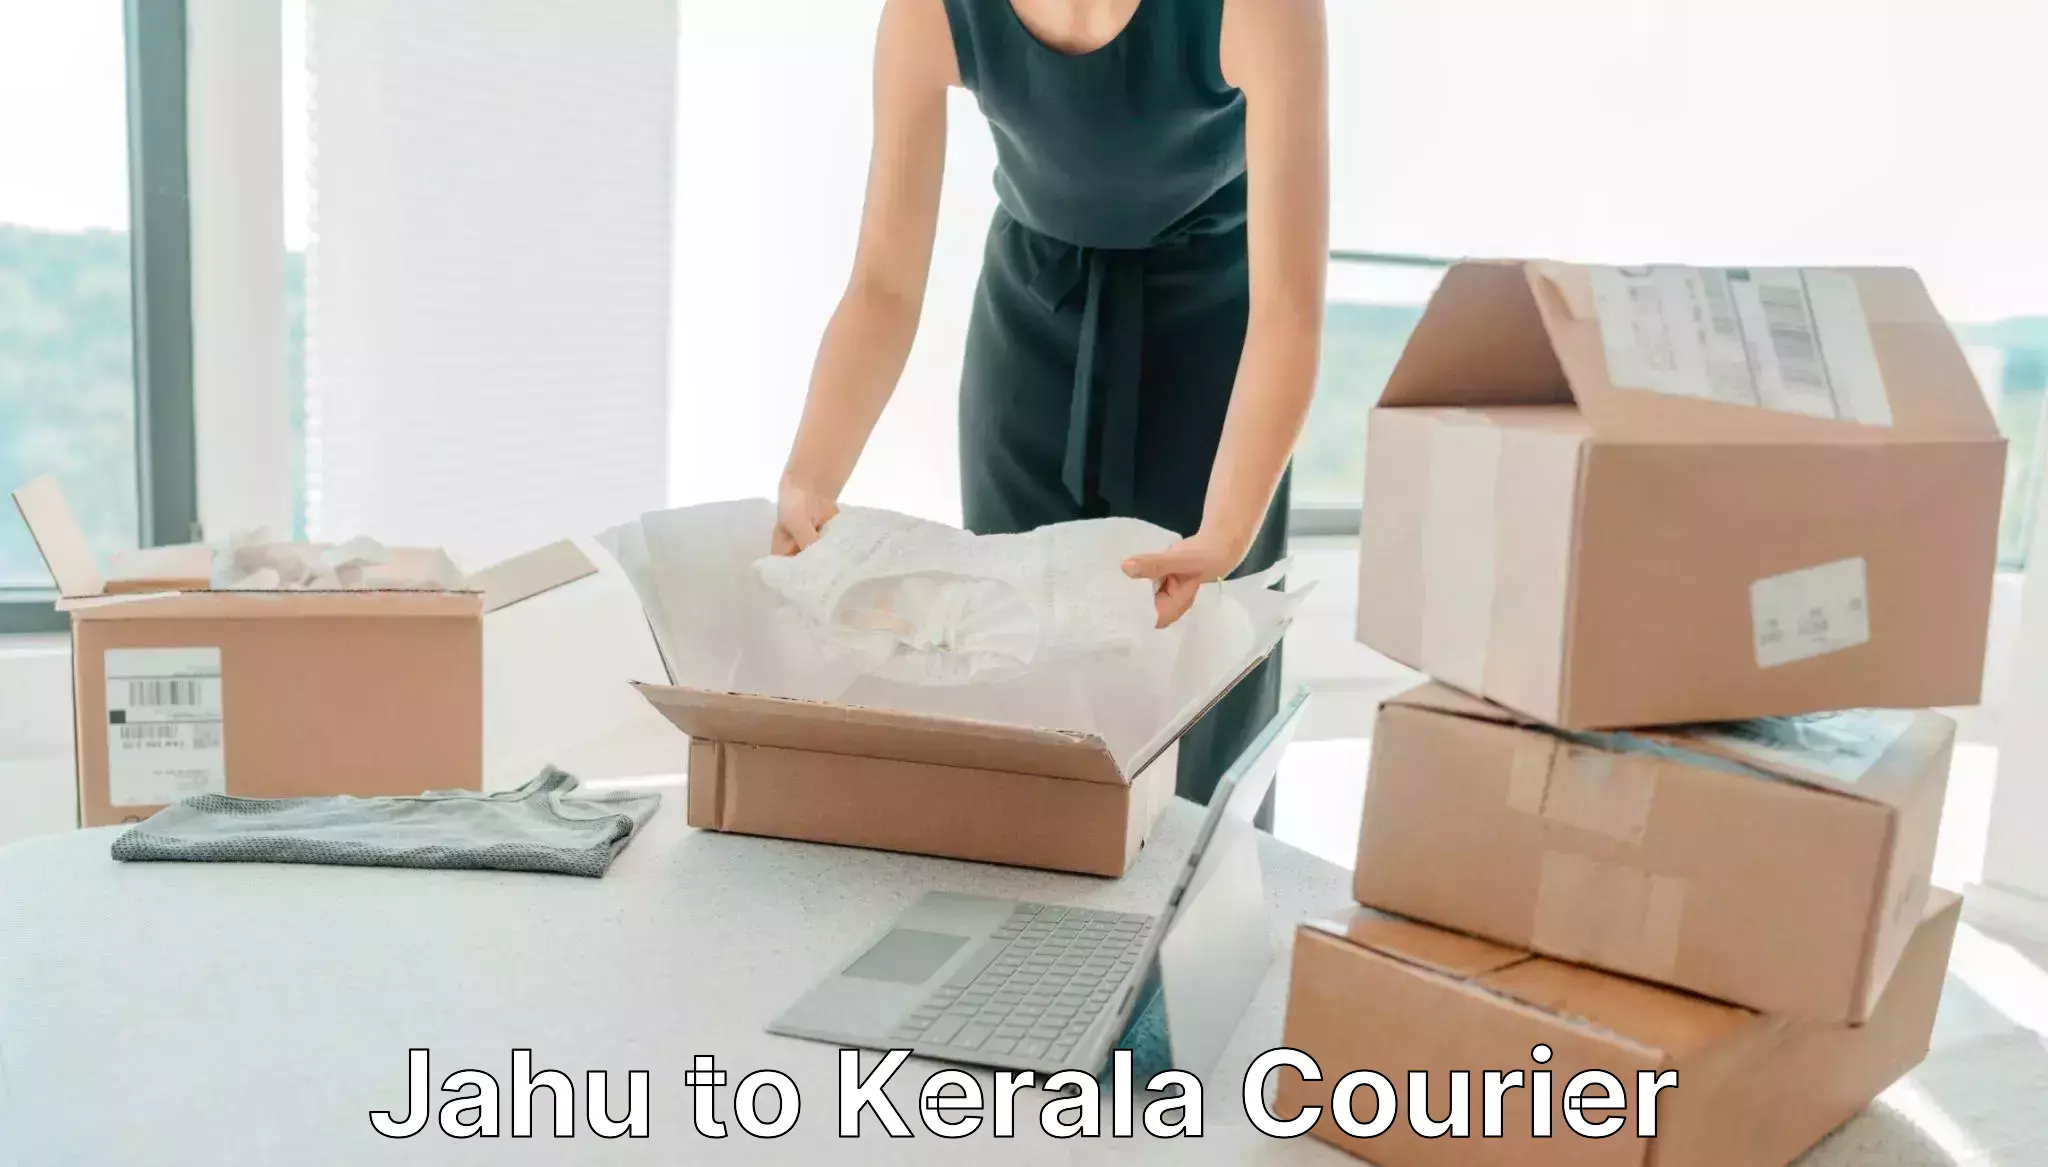 Flexible delivery schedules Jahu to Pandikkad